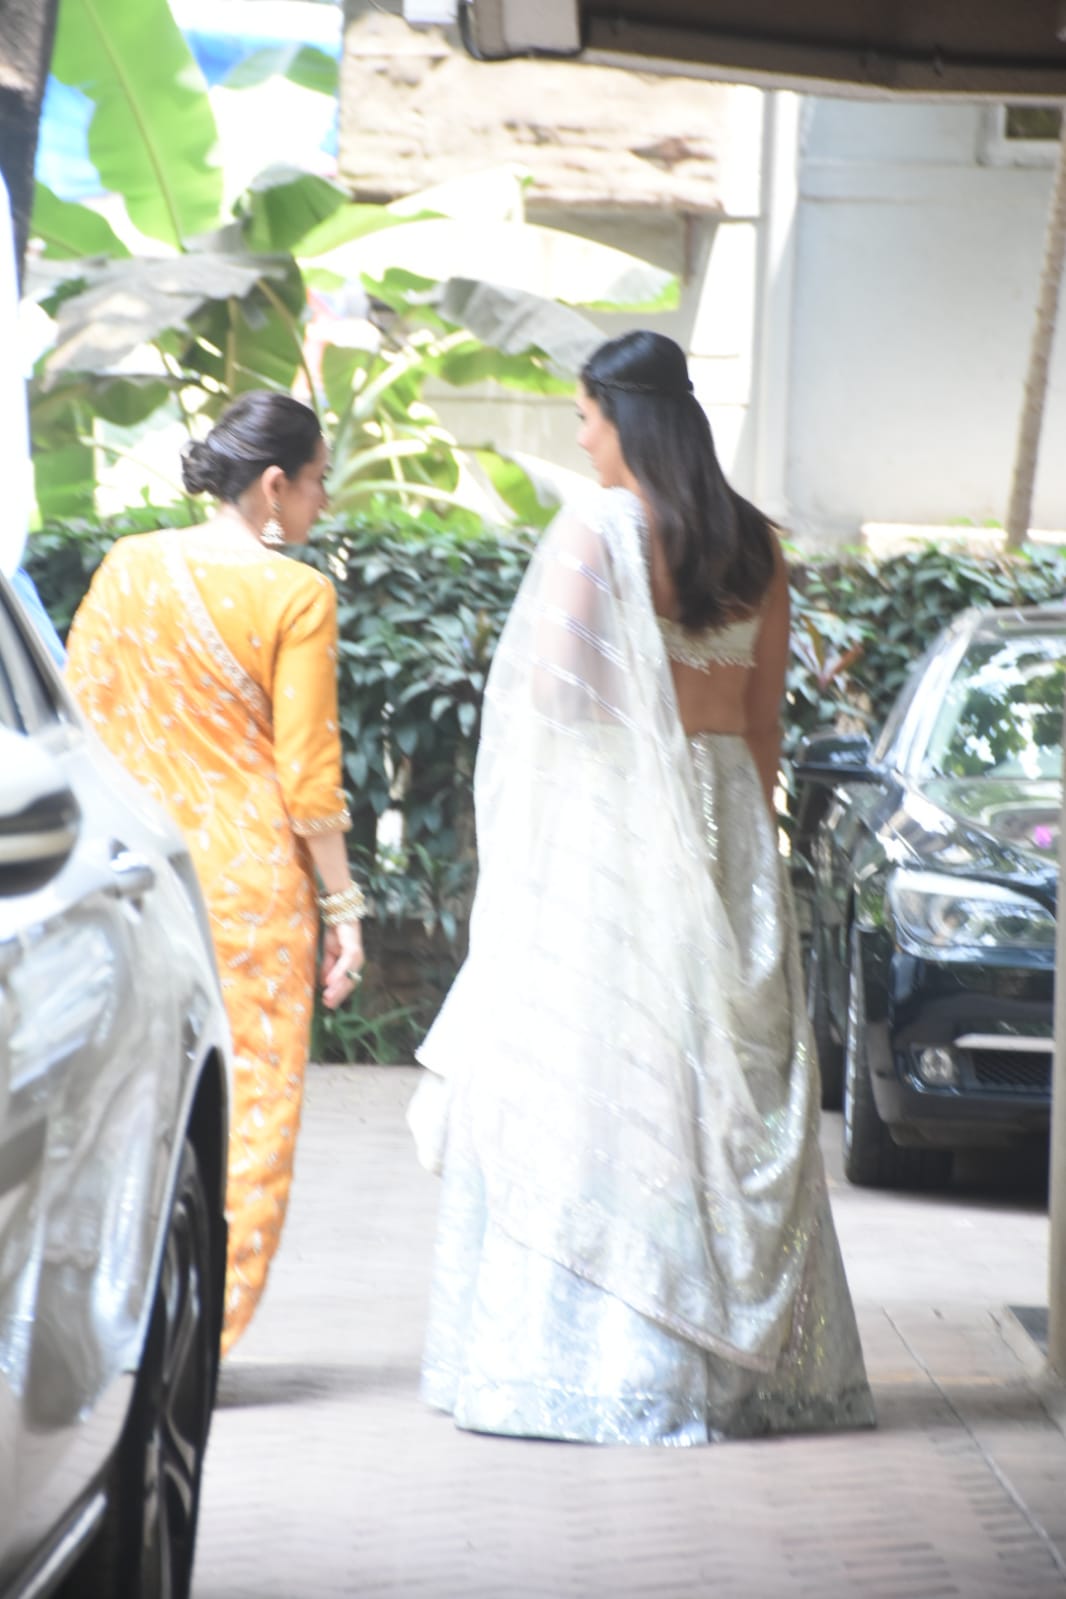 NMACC Grand Opening: Kareena Kapoor Khan-Saif Ali Khan, Karisma Kapoor ace  the royal look; OG fashionista Sonam Kapoor Ahuja steals the limelight,  Kriti Sanon-Athiya Shetty dazzle